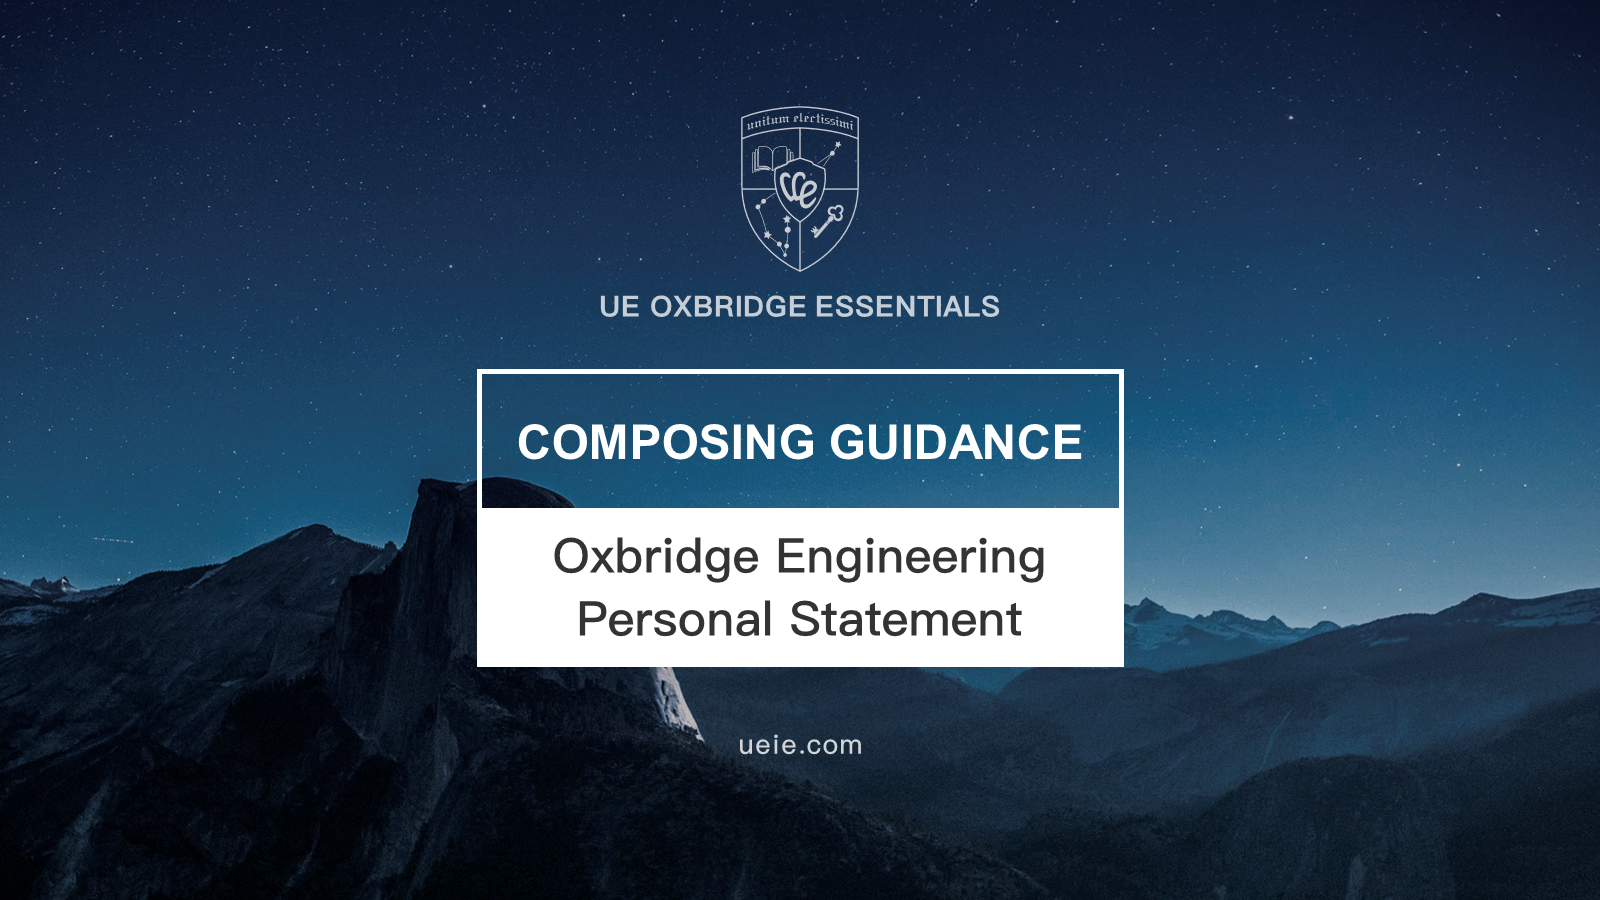 Oxbridge Engineering Personal Statement: Composing Guidance